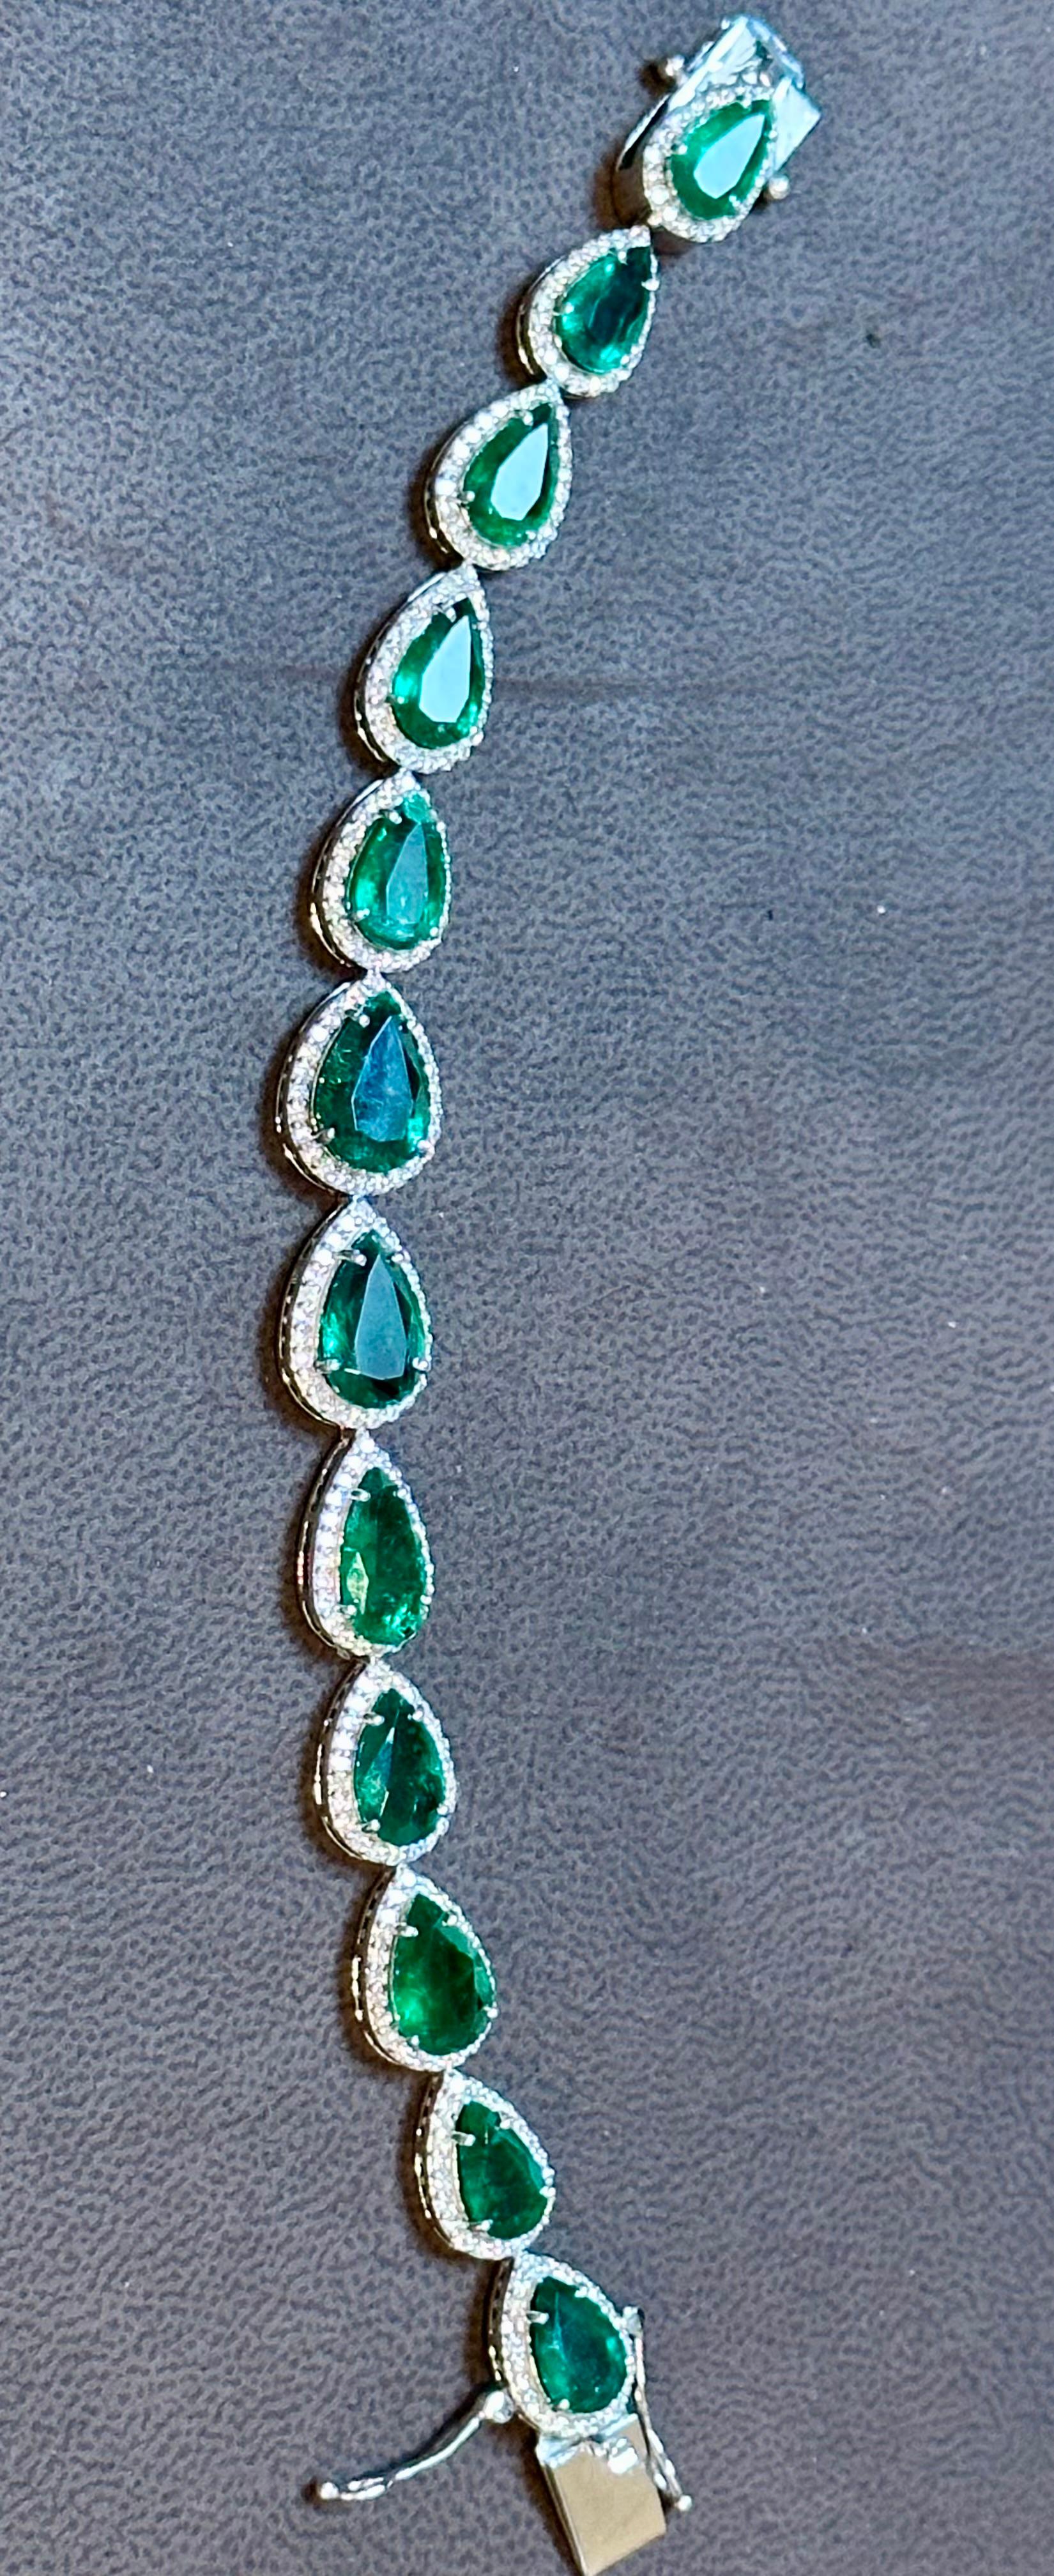 28 Carat Natural Zambian Emerald & Diamond Tennis Bracelet 14 Karat White Gold For Sale 4